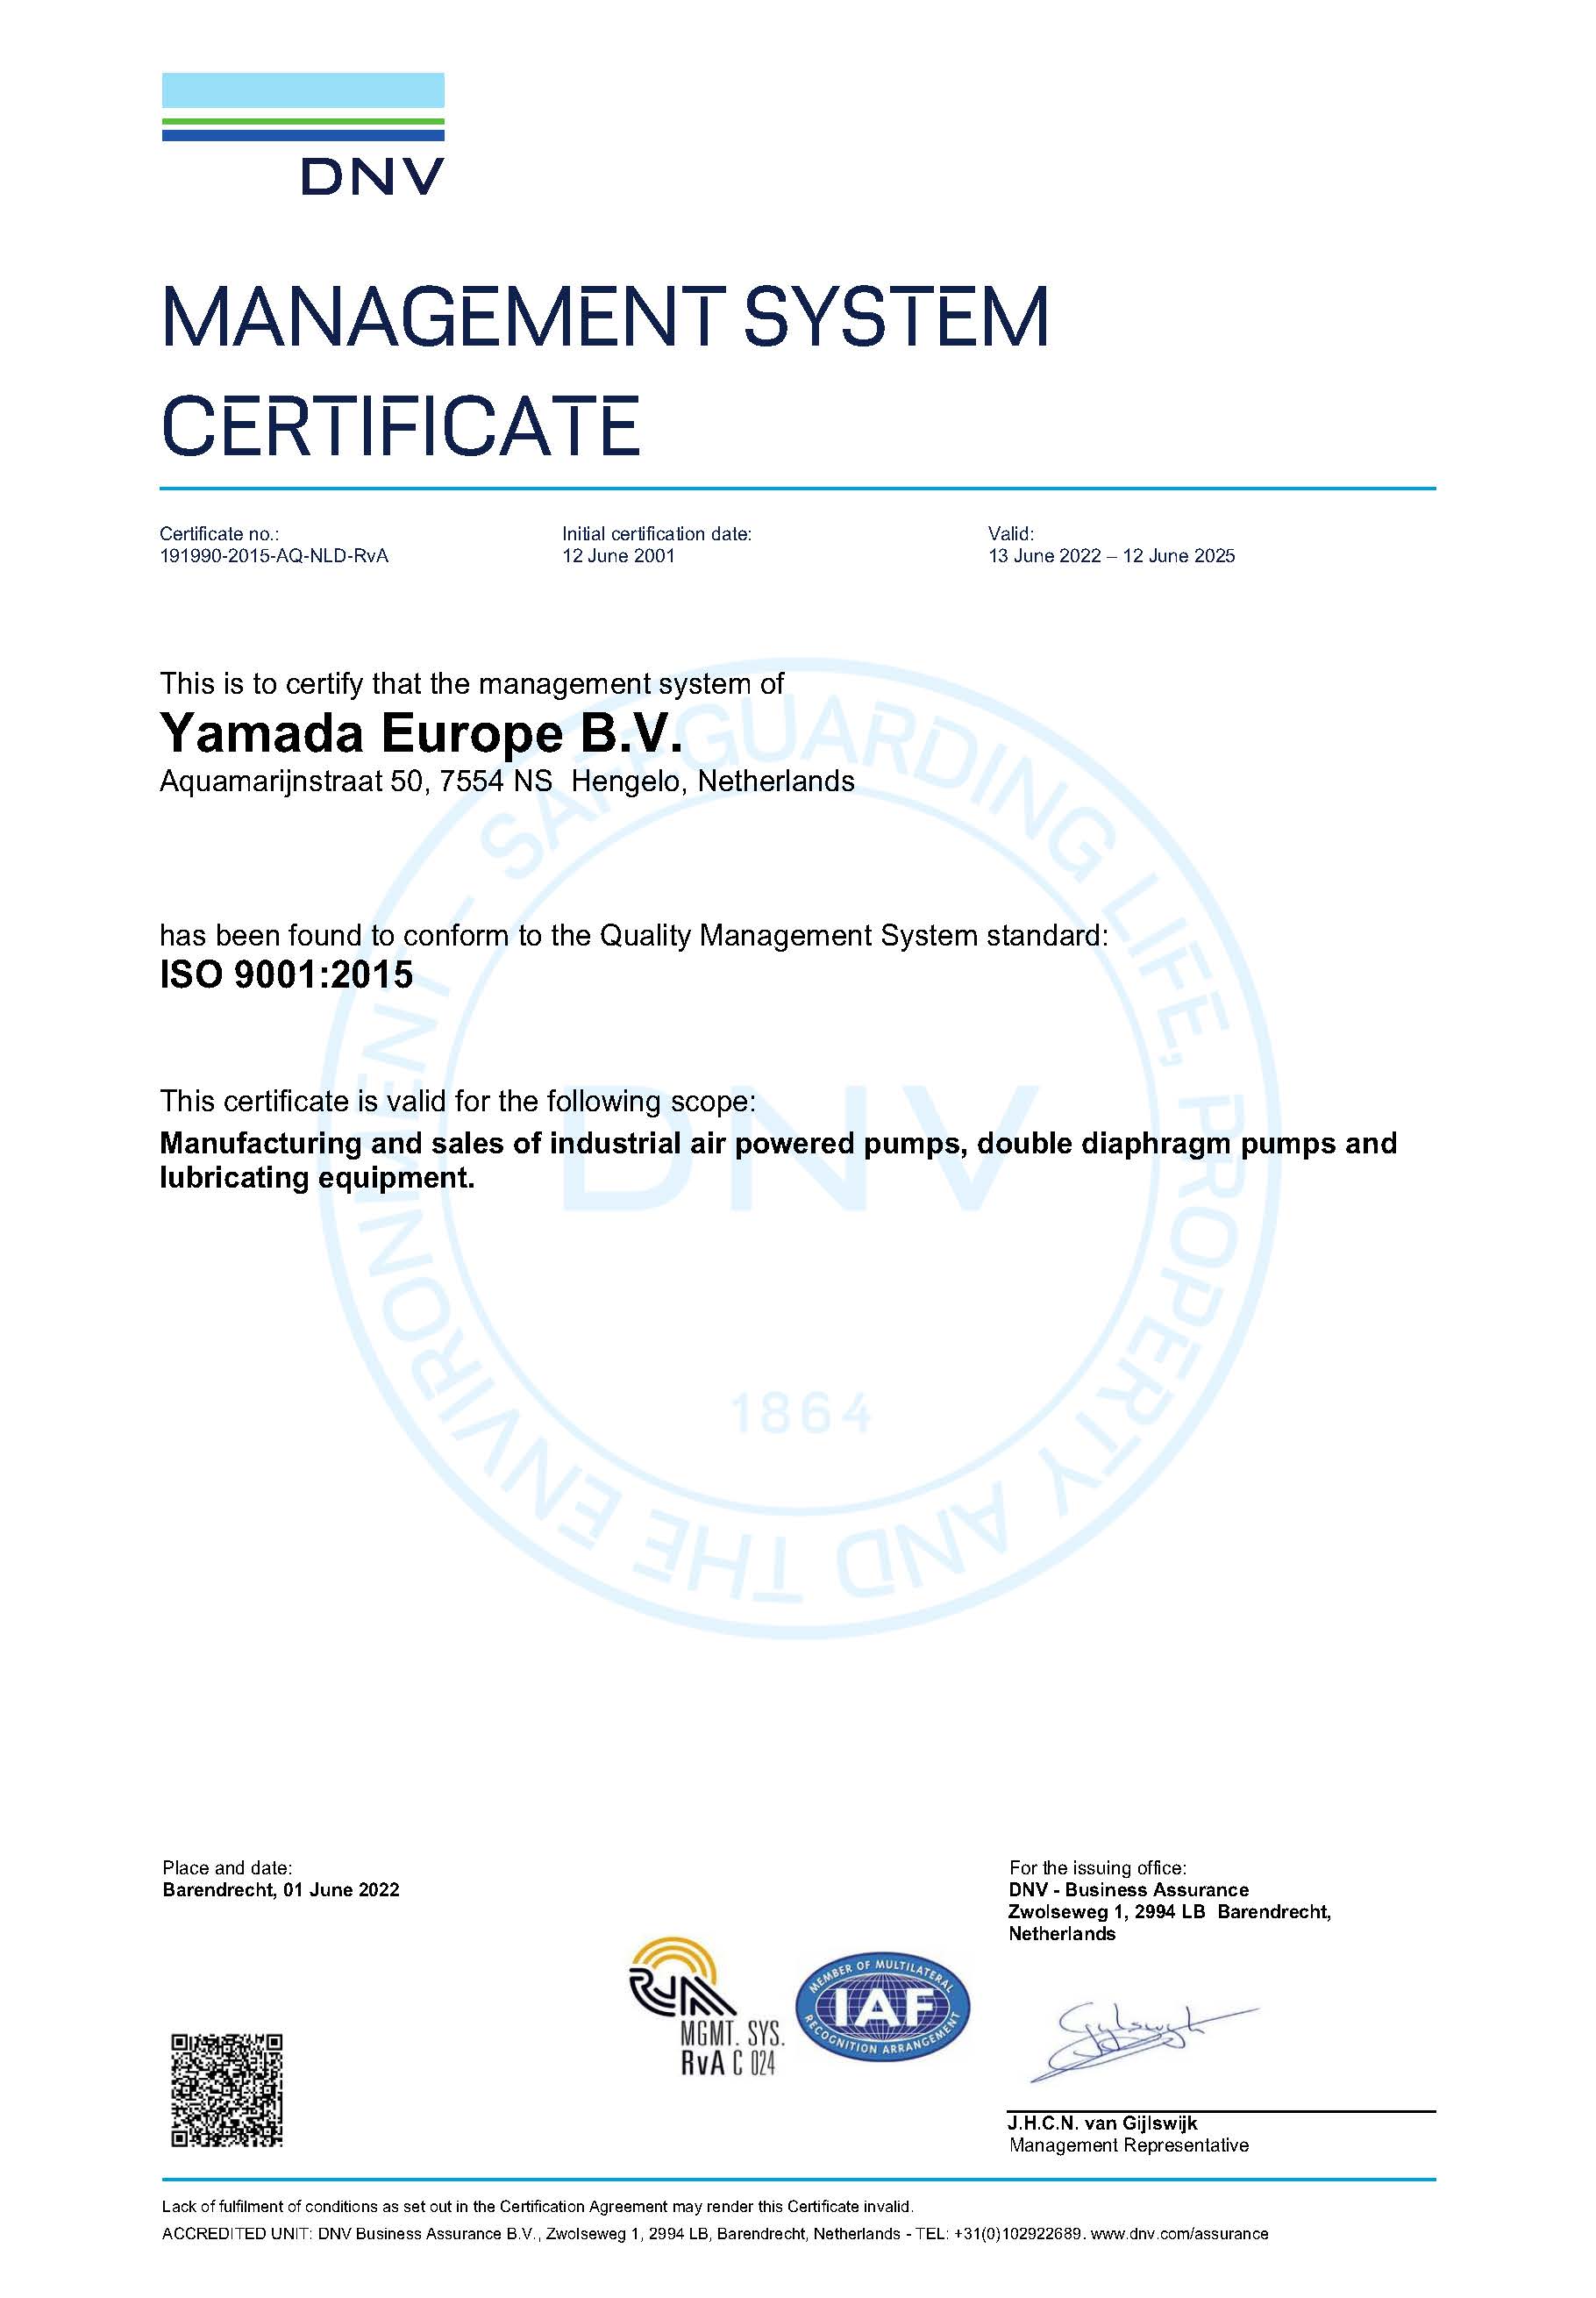 DNV - Management System Certificate - Yamada Europe